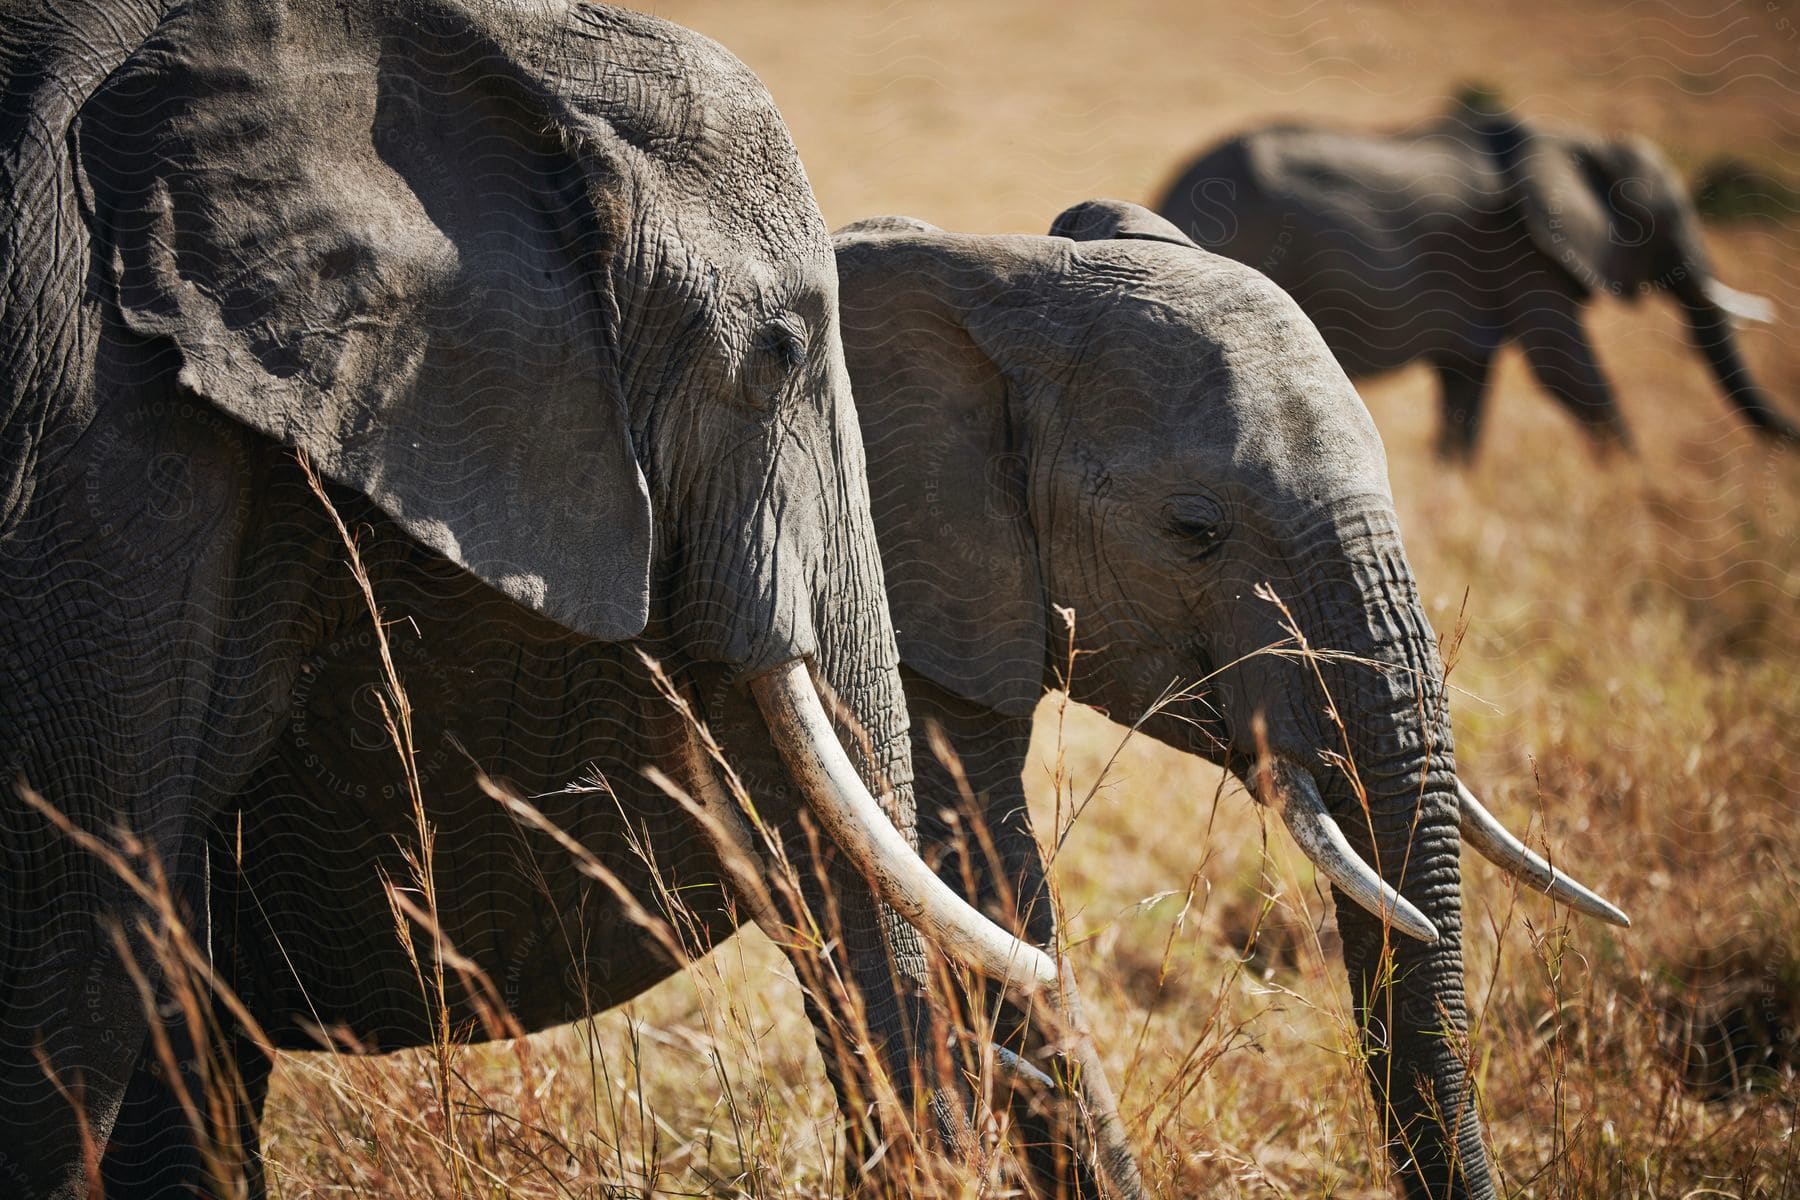 Several elephants walking across a grassy plain